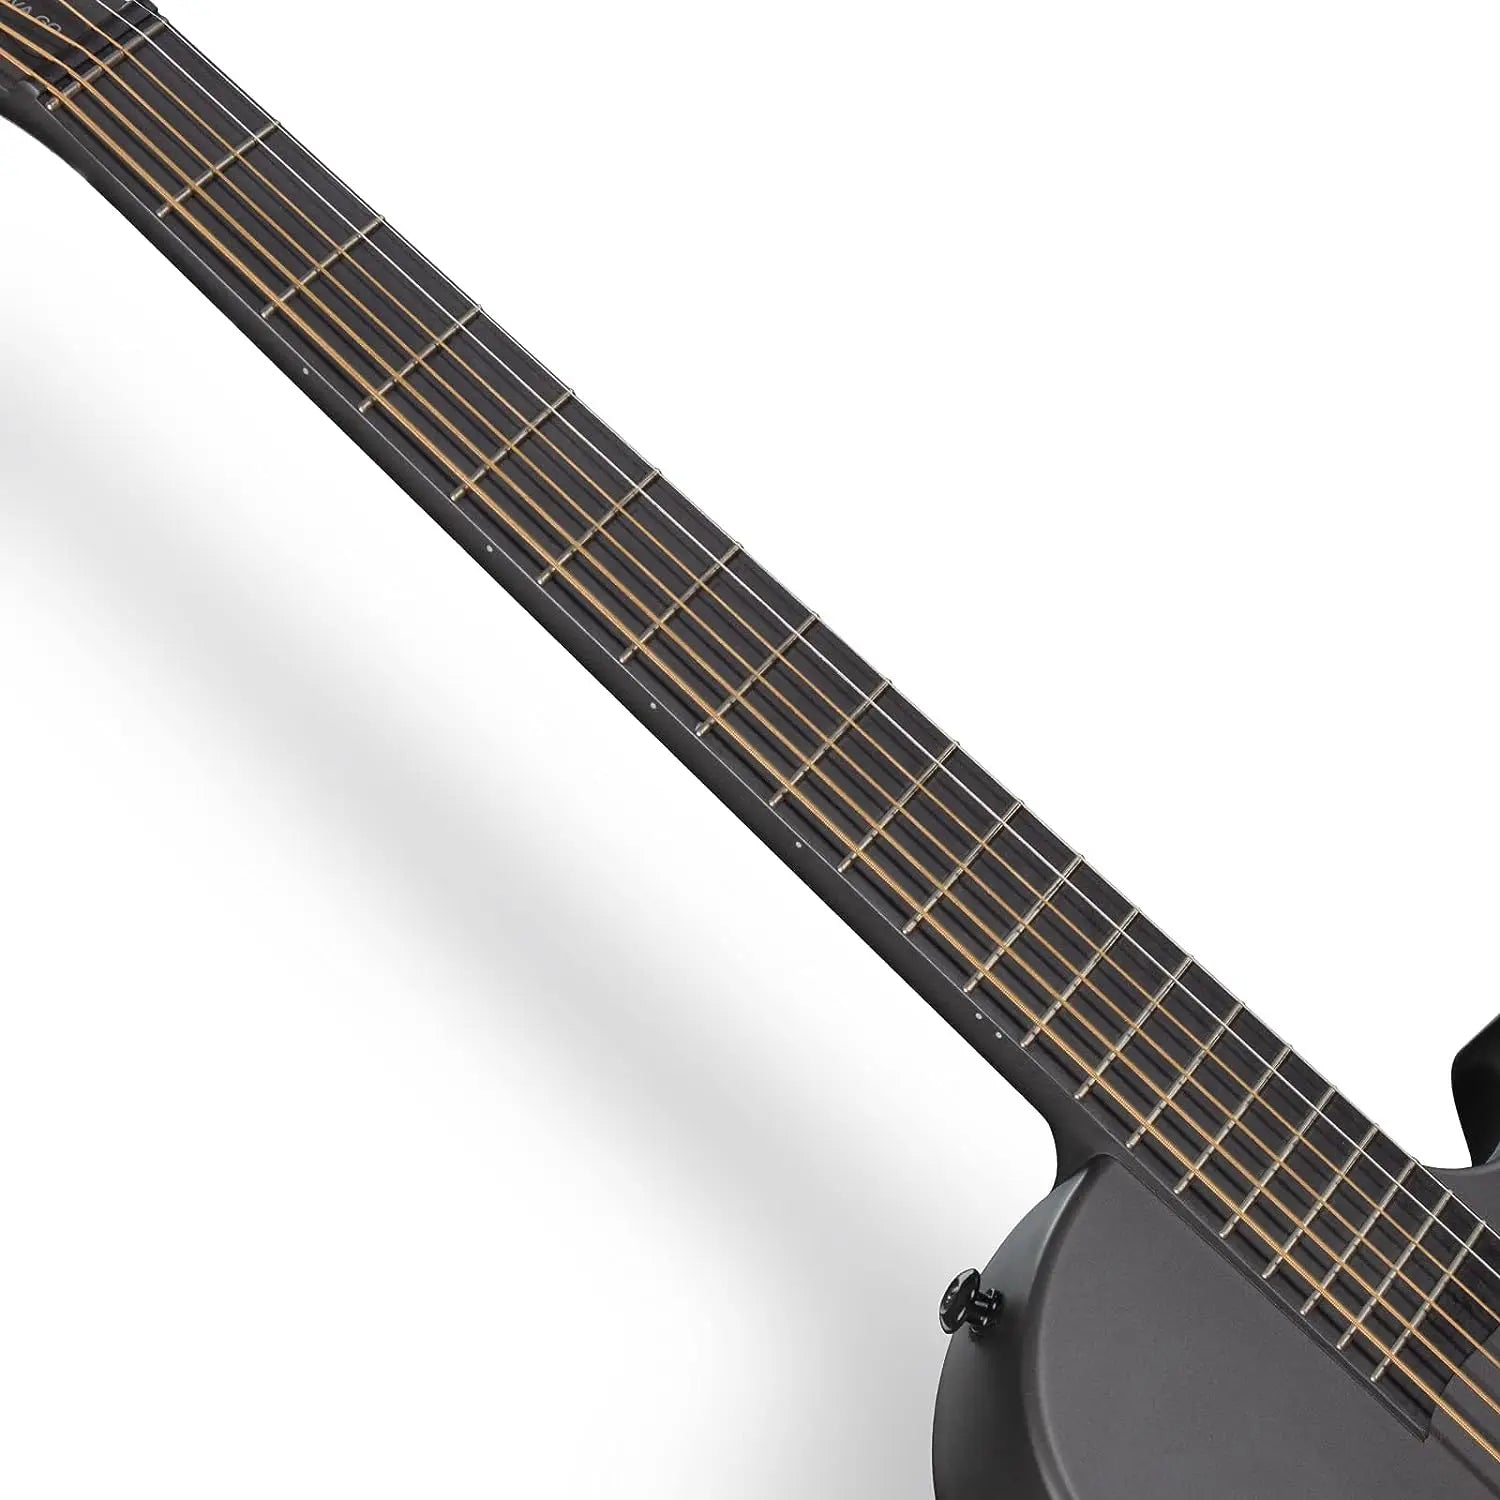 Enya NOVA GO SP1 Electric Guitar Smart Carbon Fiber Acoustic 35 Inch with Pickup, Case, Strap, Cable Travel Guitarra Violão - Premium acoustic guitar from Lizard Vigilante - Just $399.99! Shop now at Lizard Vigilante